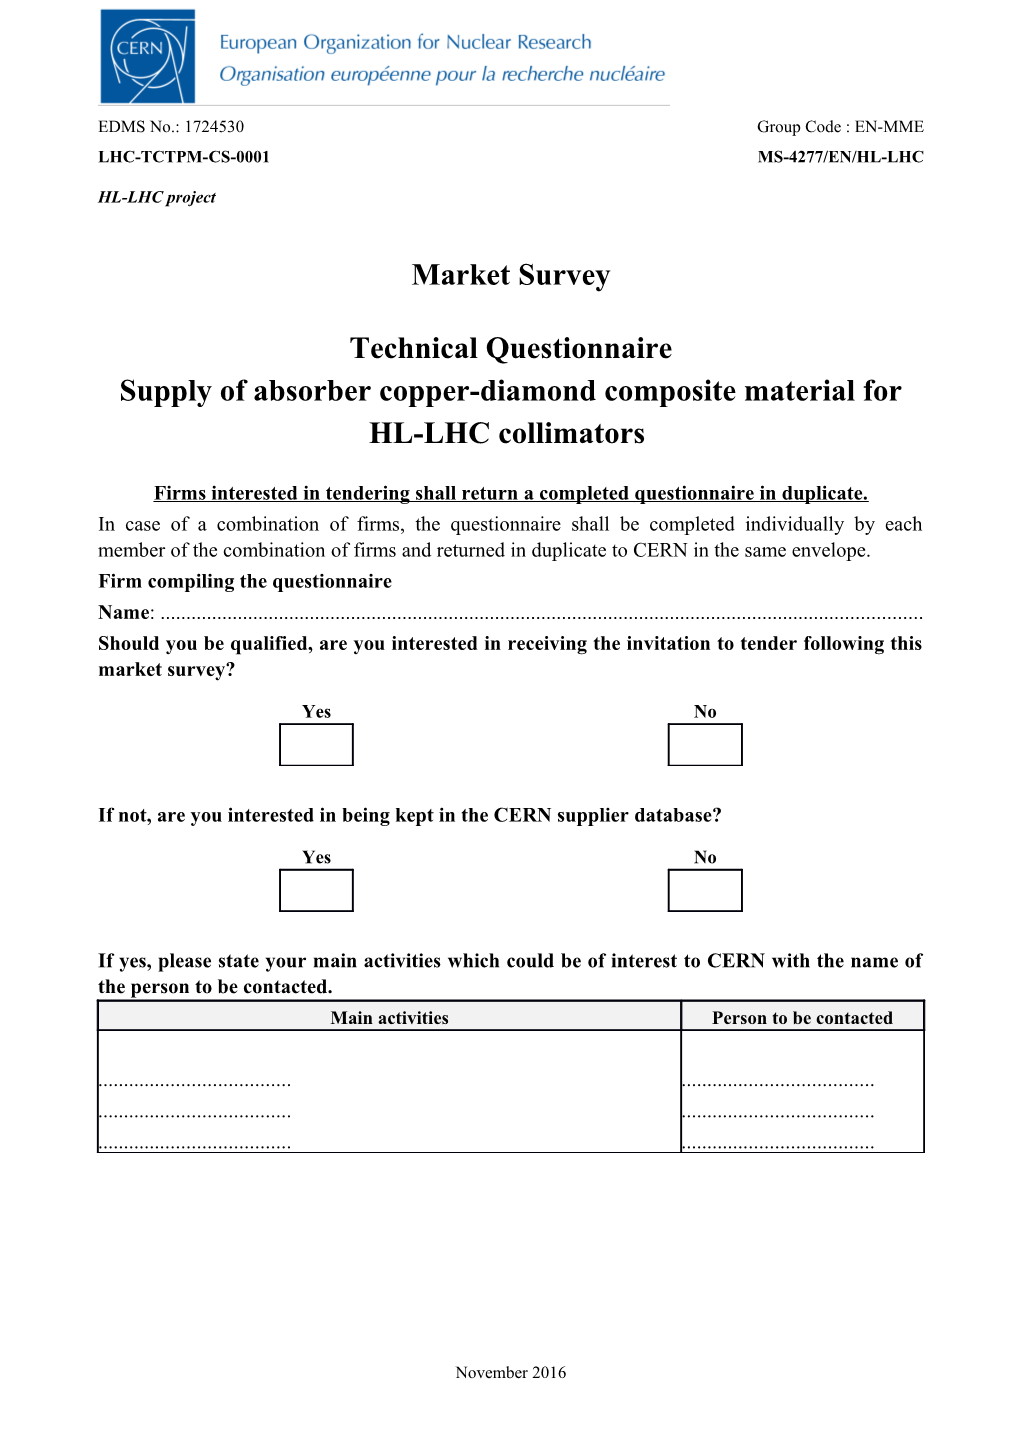 MS Supplies Technical Questionnaire Template